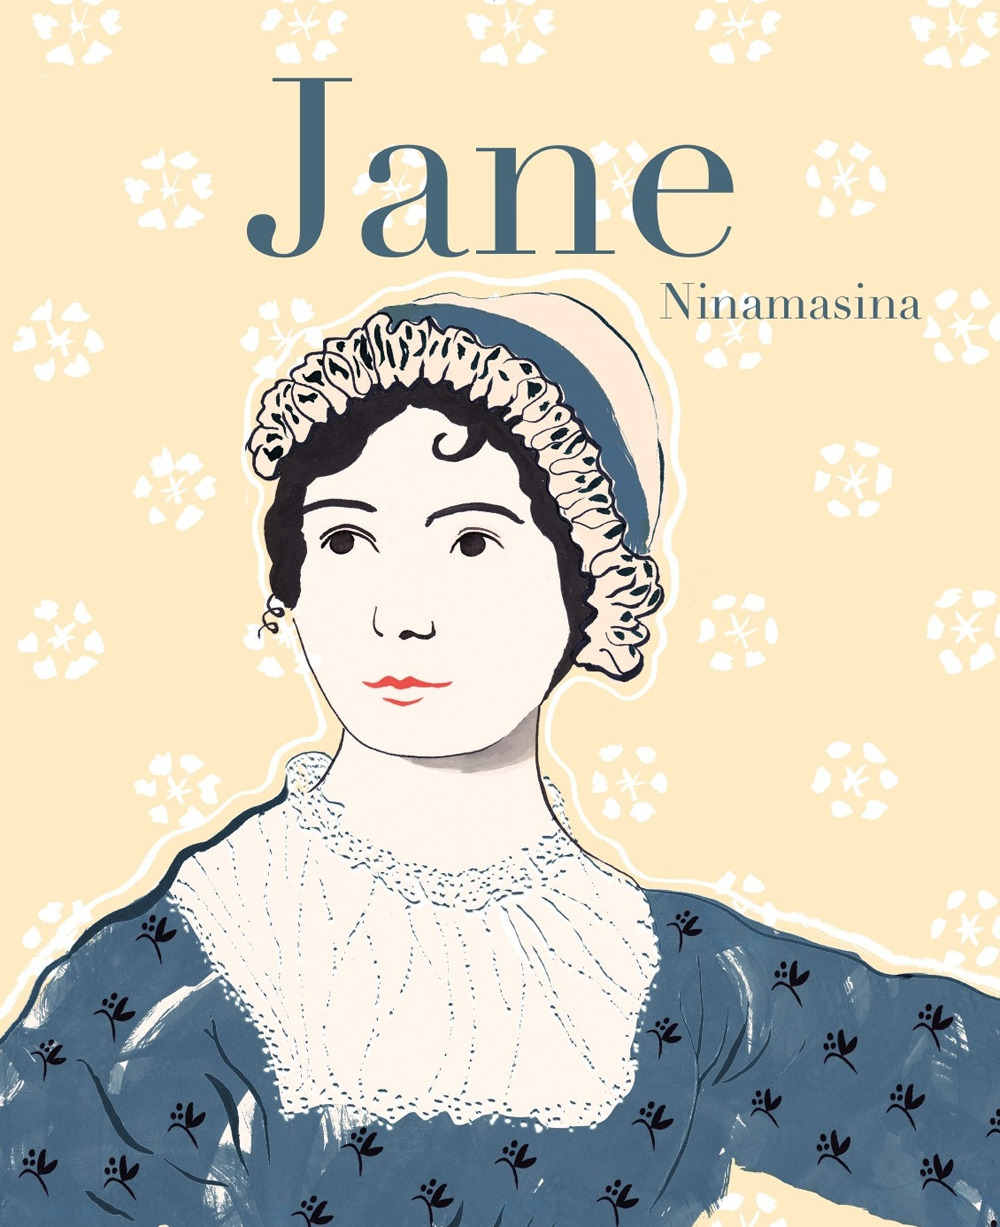 Jane. Vita di Jane Austen